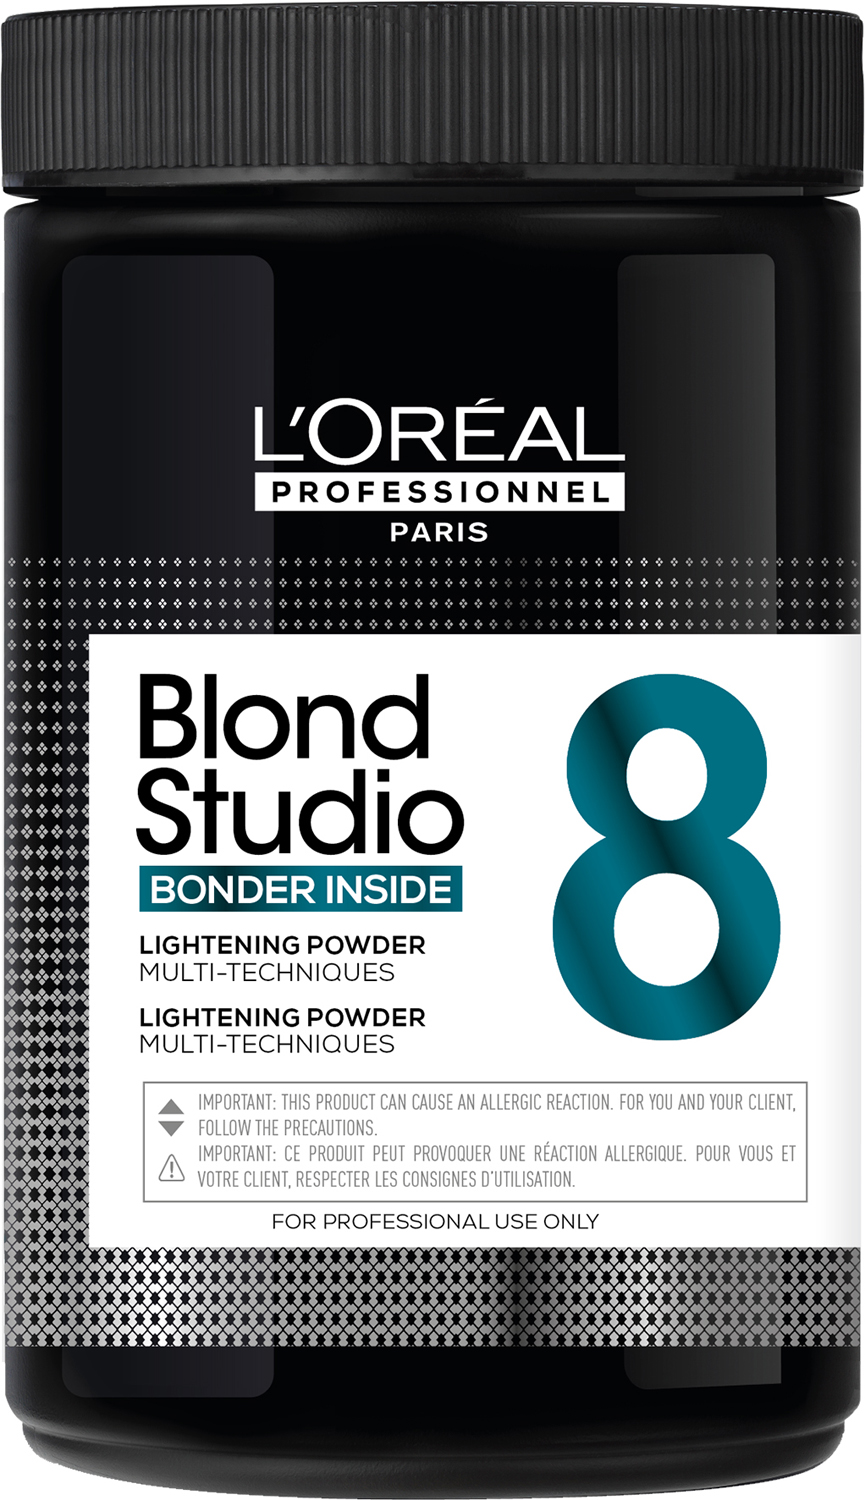 Blond Studio 8 Bonder Insider 500g